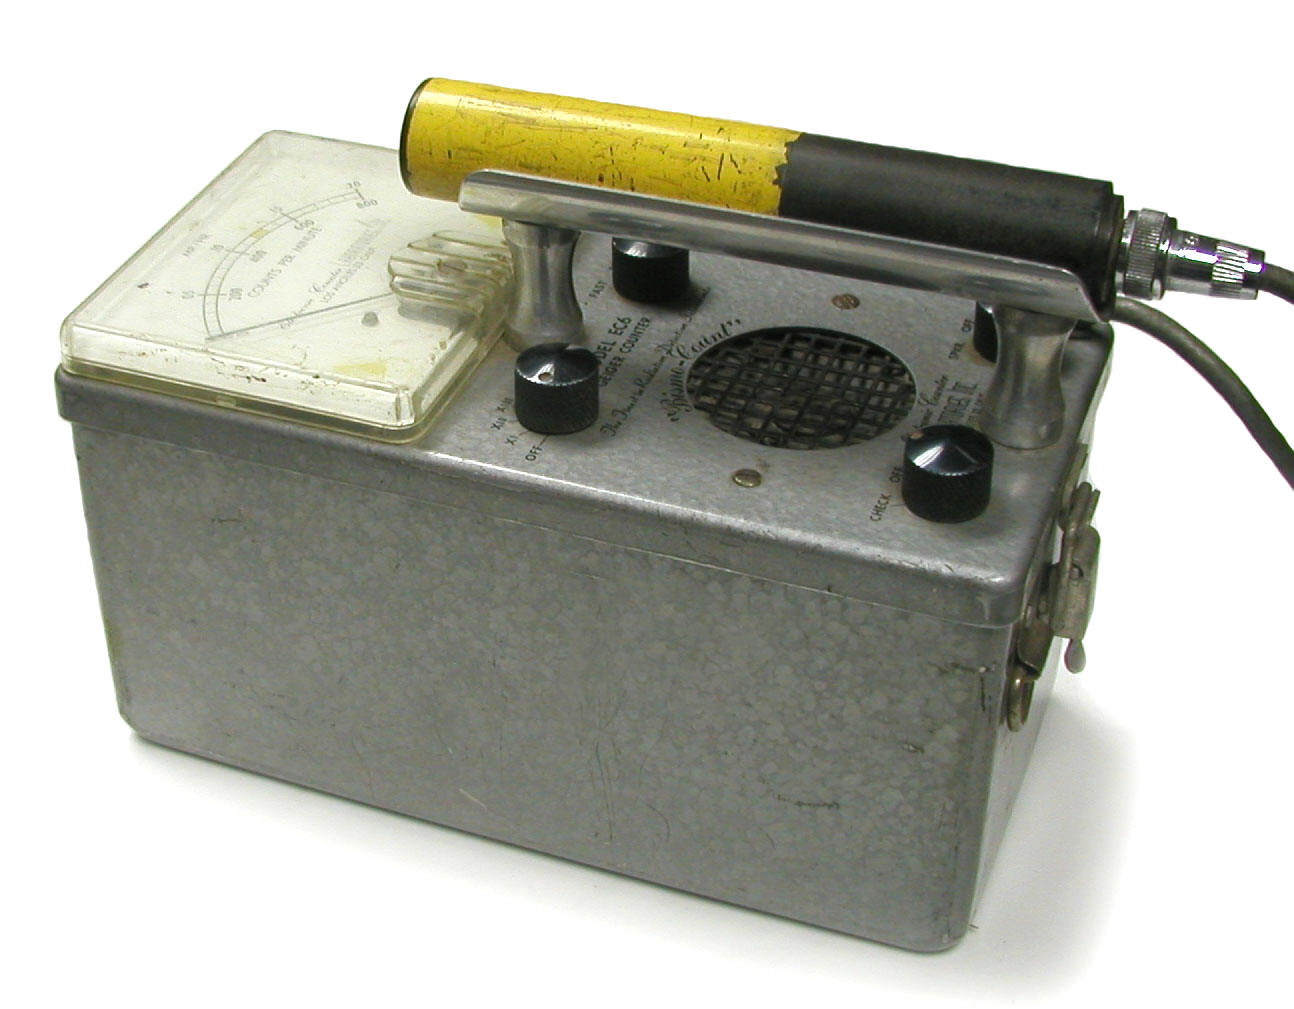 ECL Model EC 6 "Bismo-Count" GM Detector